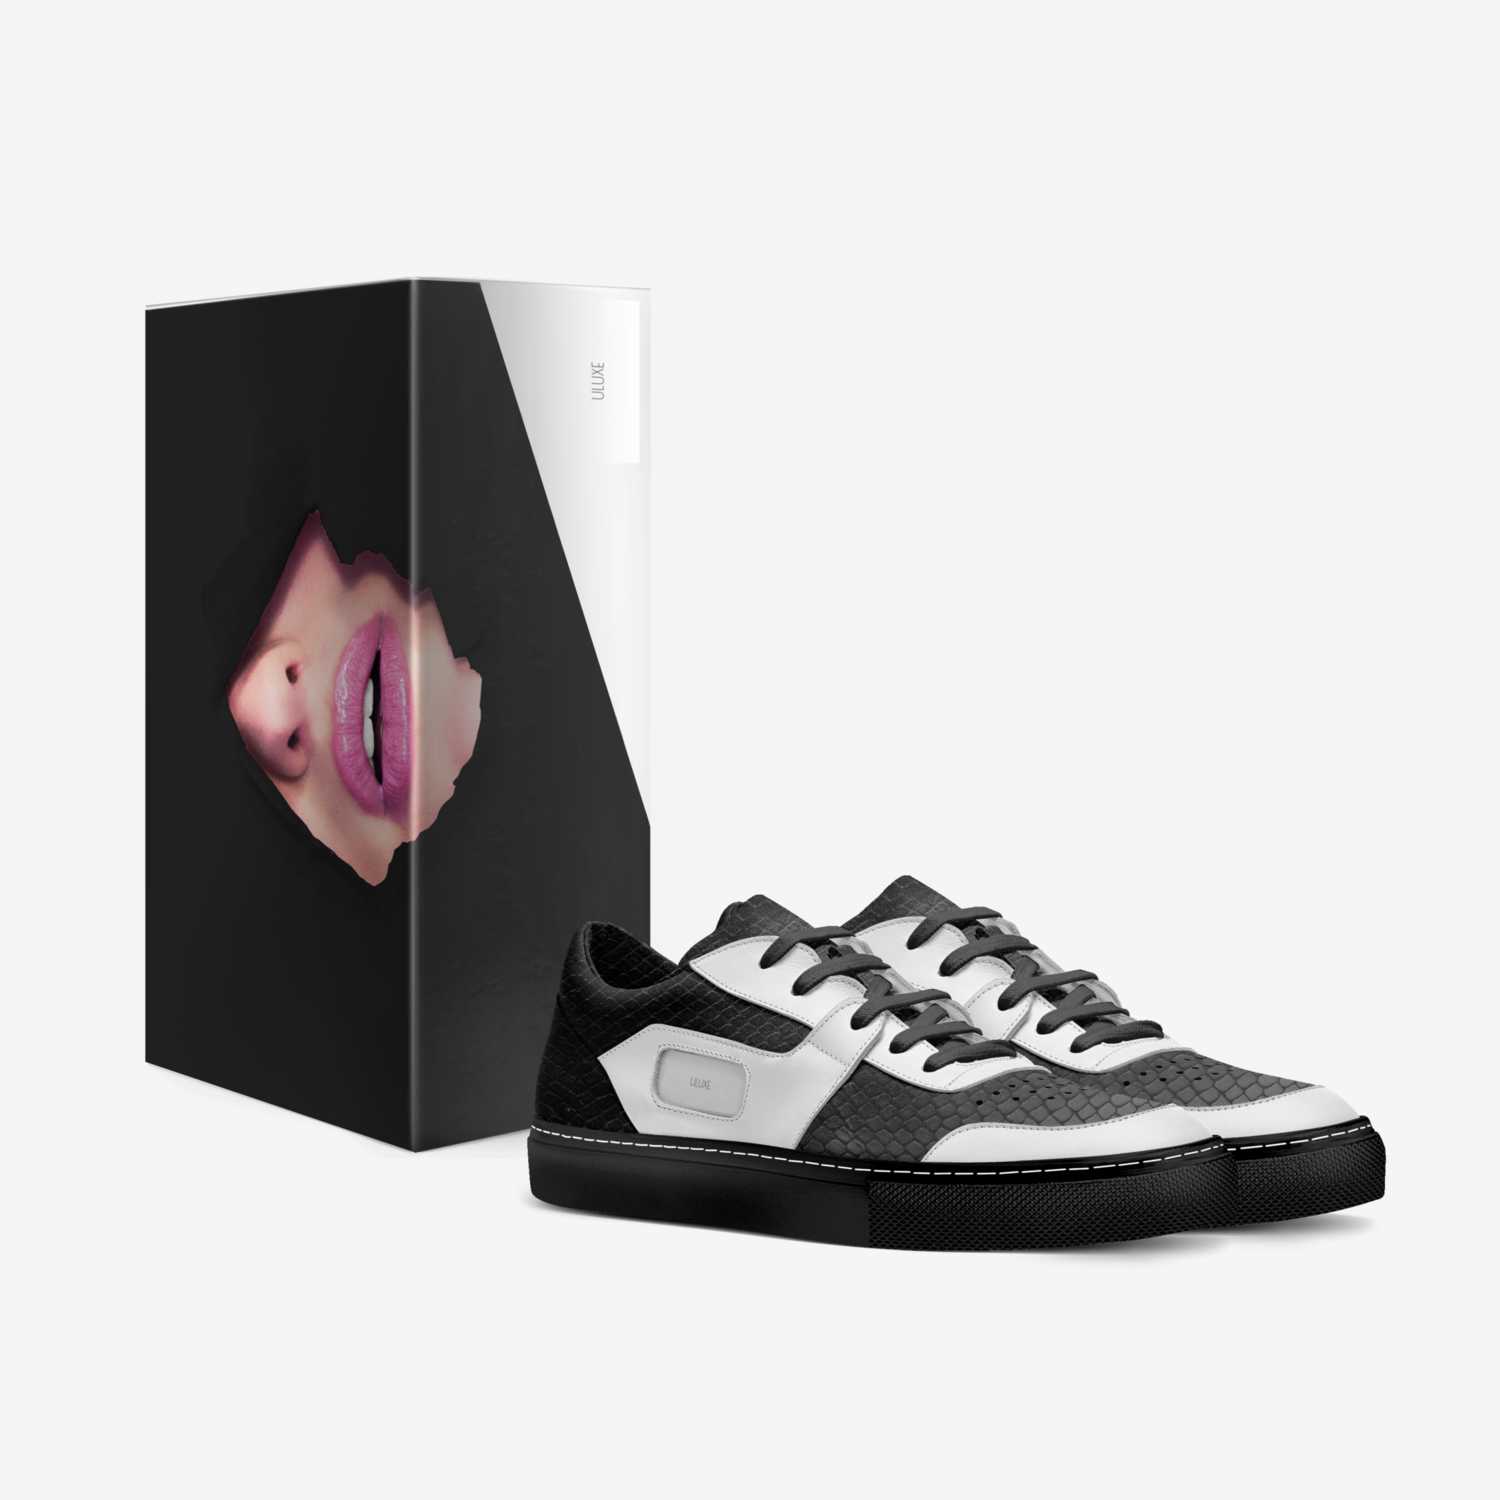 ULuxe custom made in Italy shoes by U Luxe Luxury Streetwear | Box view